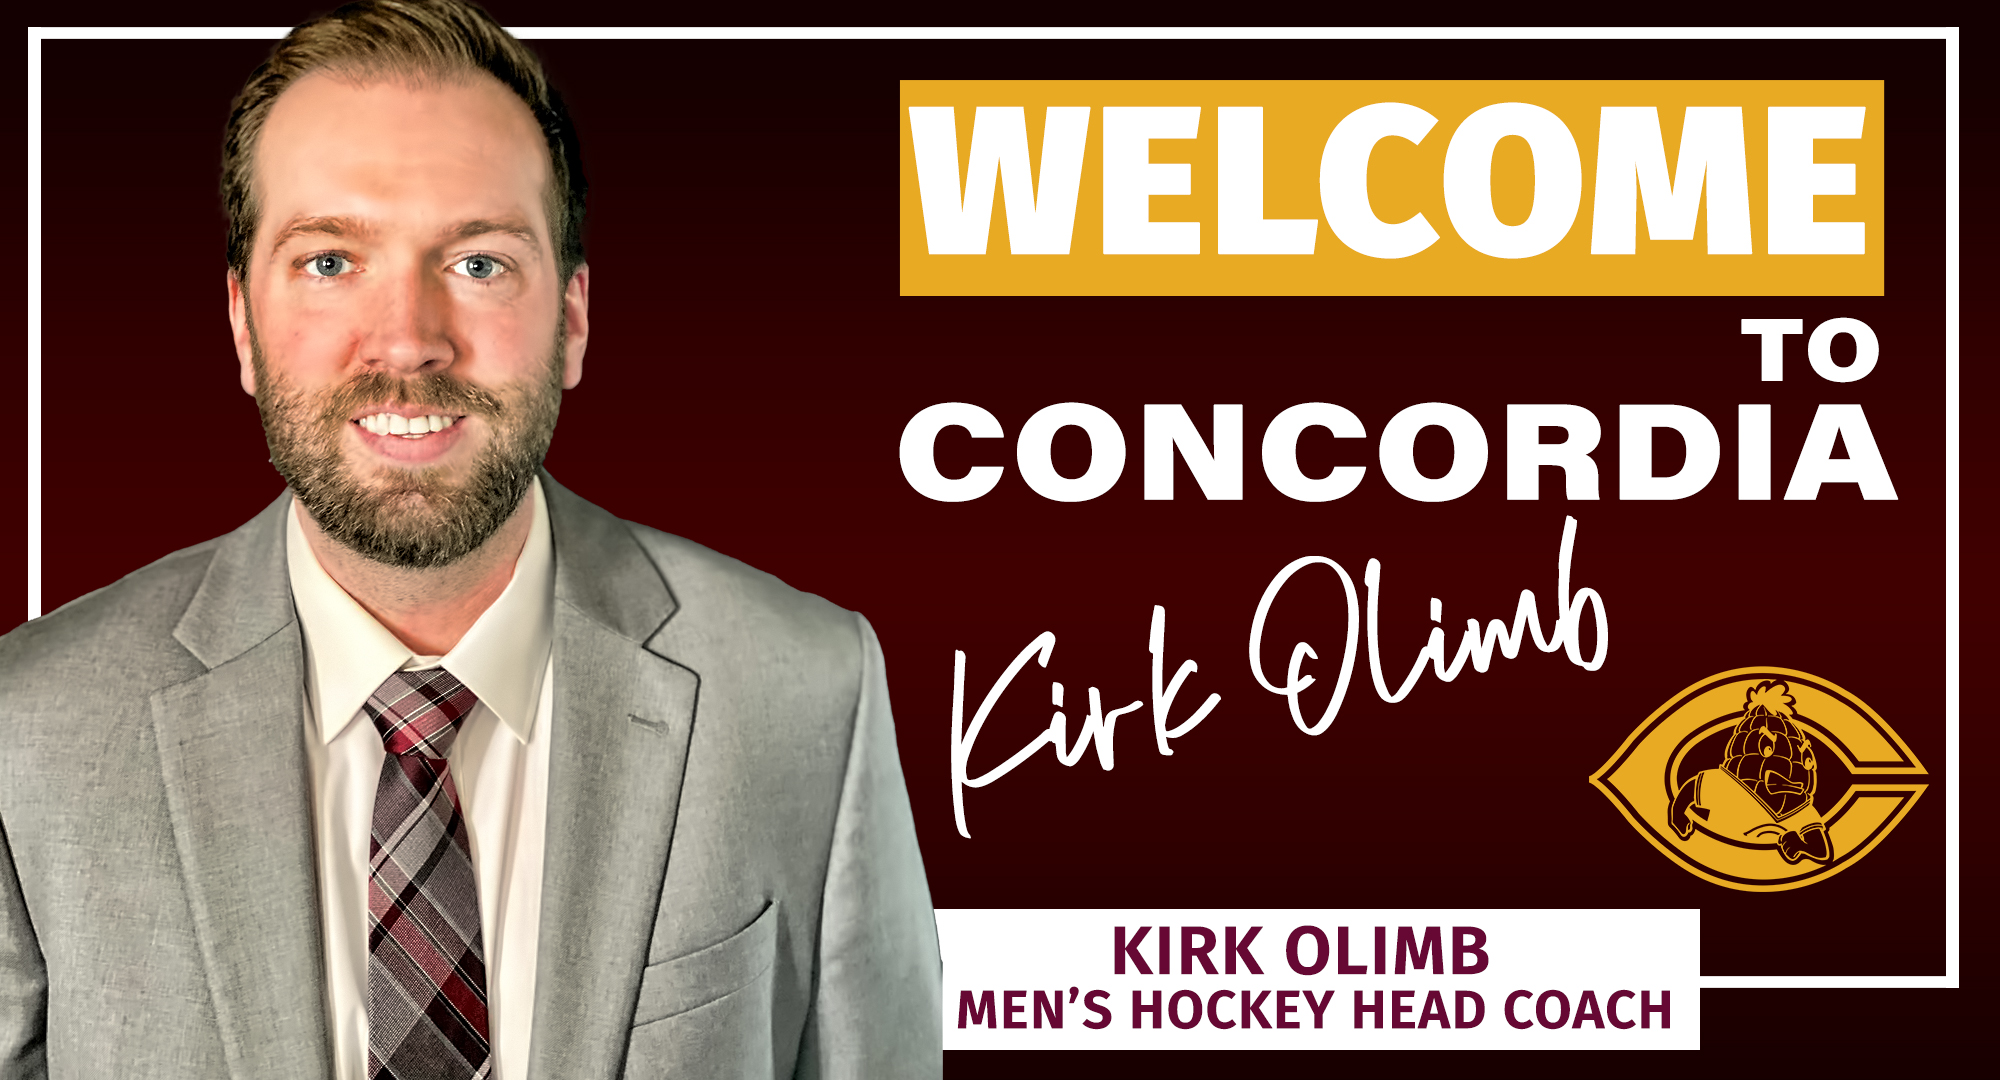 Former Willmar Warhawks (NA3HL) Head Coach and General Manger Kirk Olimb has been named the new men's hockey head coach.